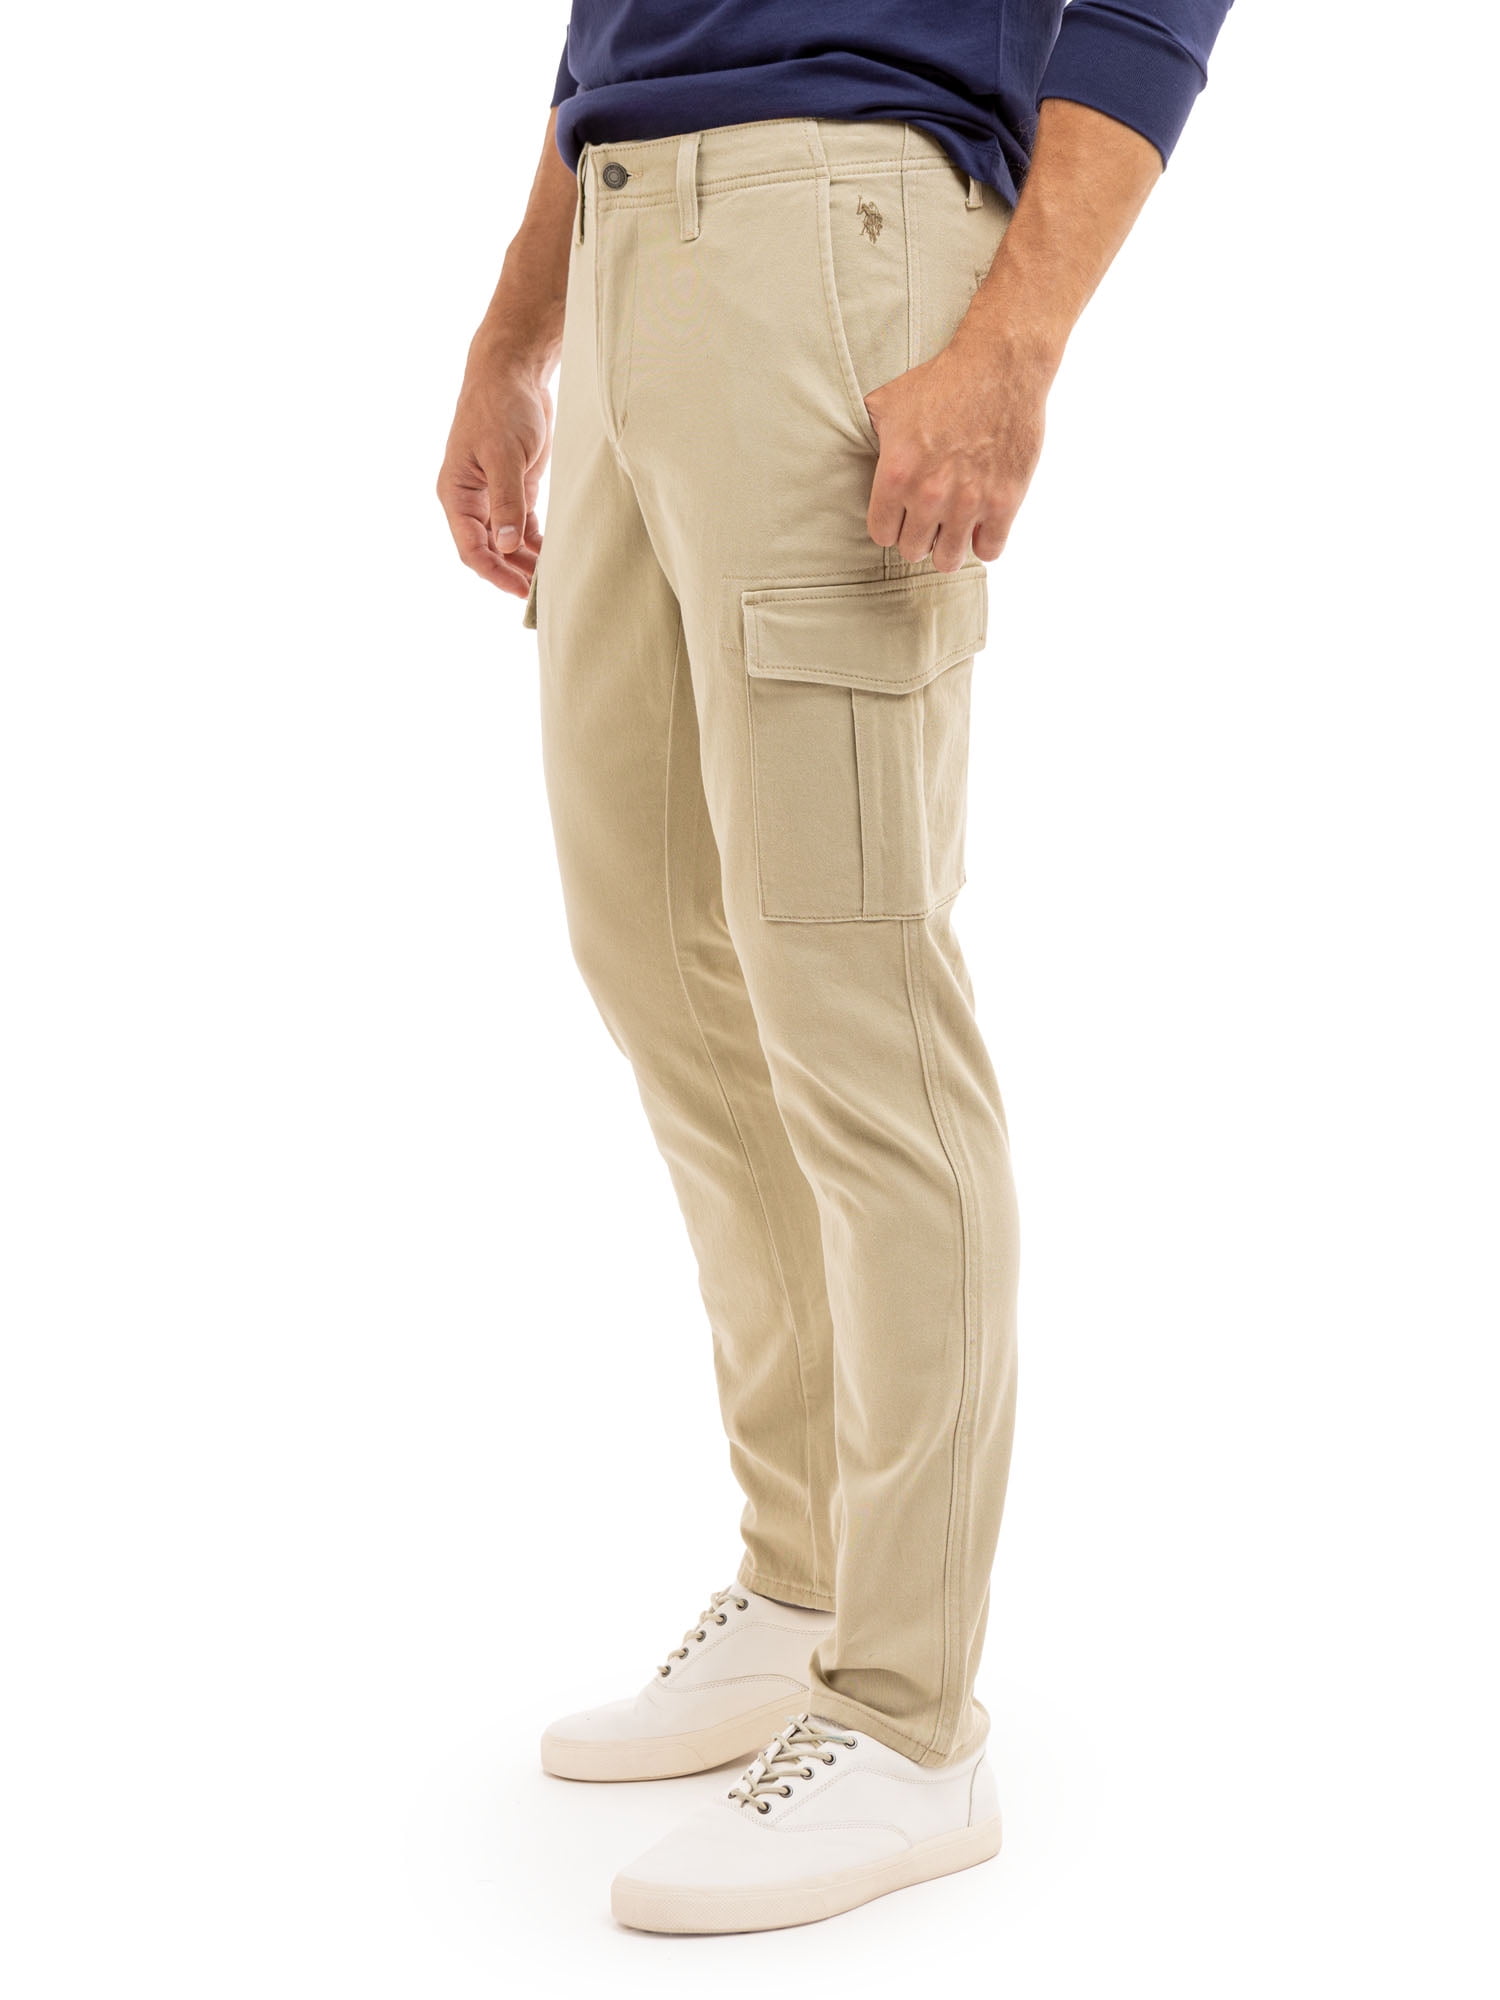 U.S. Polo Assn. Slim Fit Twill Cargo Pants, $50, .com